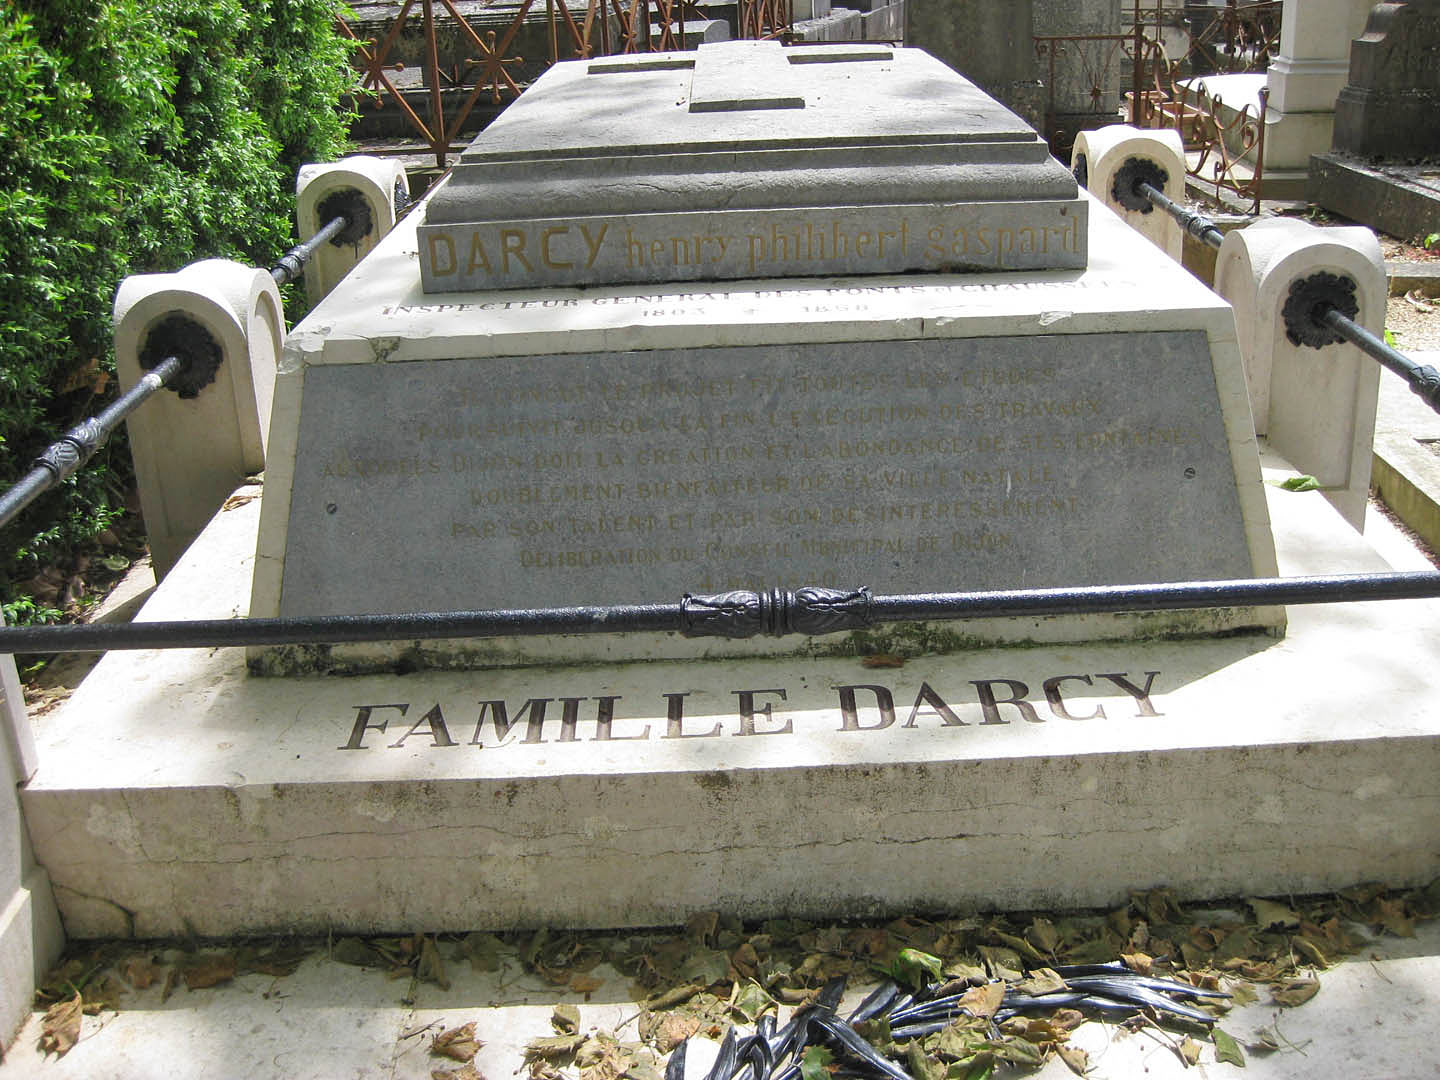 Darcy's grave site